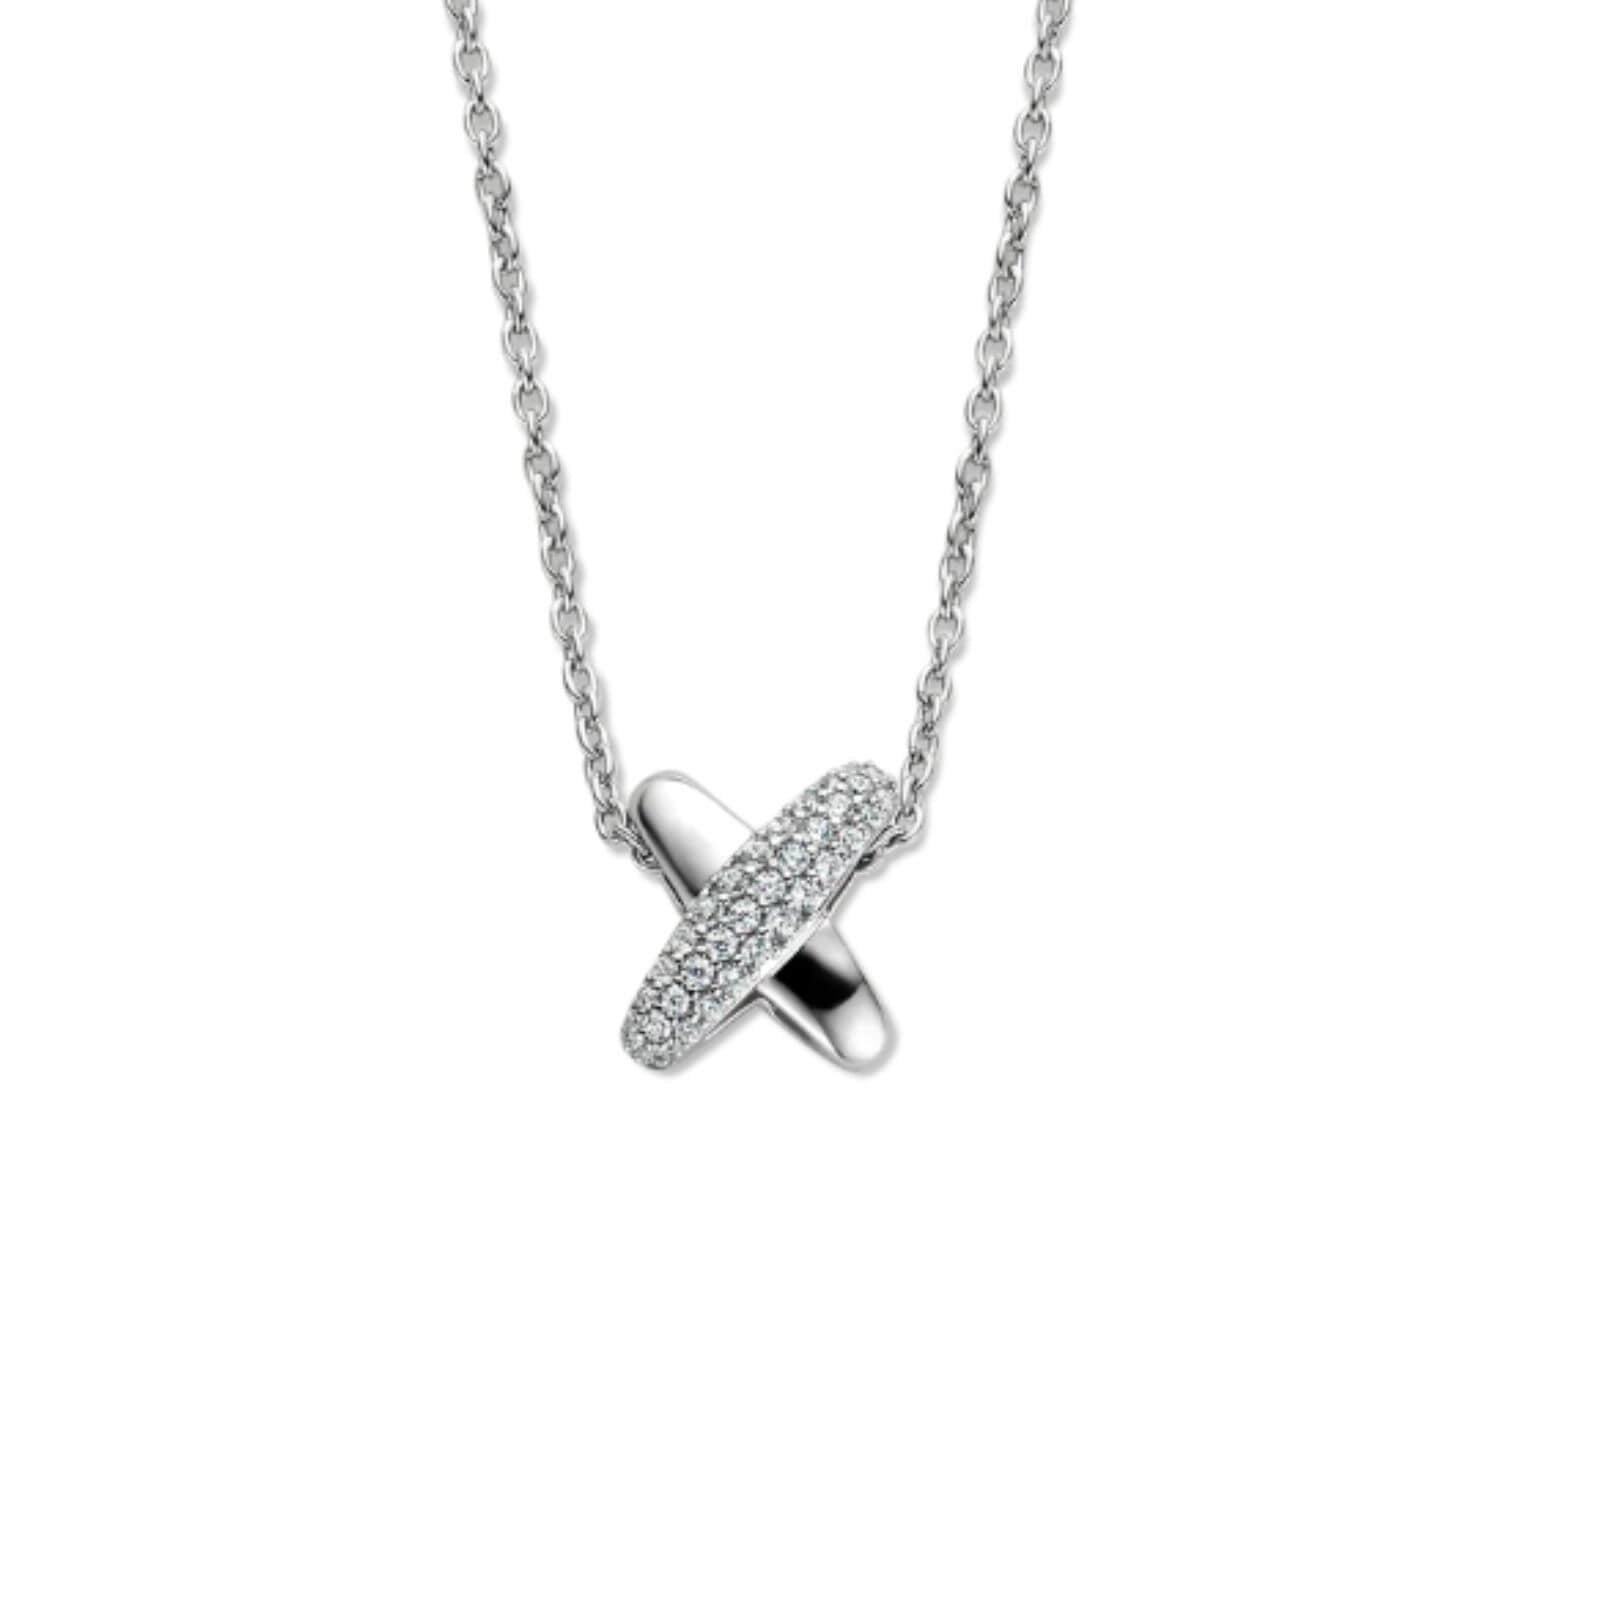 Tiffany & Co Signature X Pendant & Necklace 16